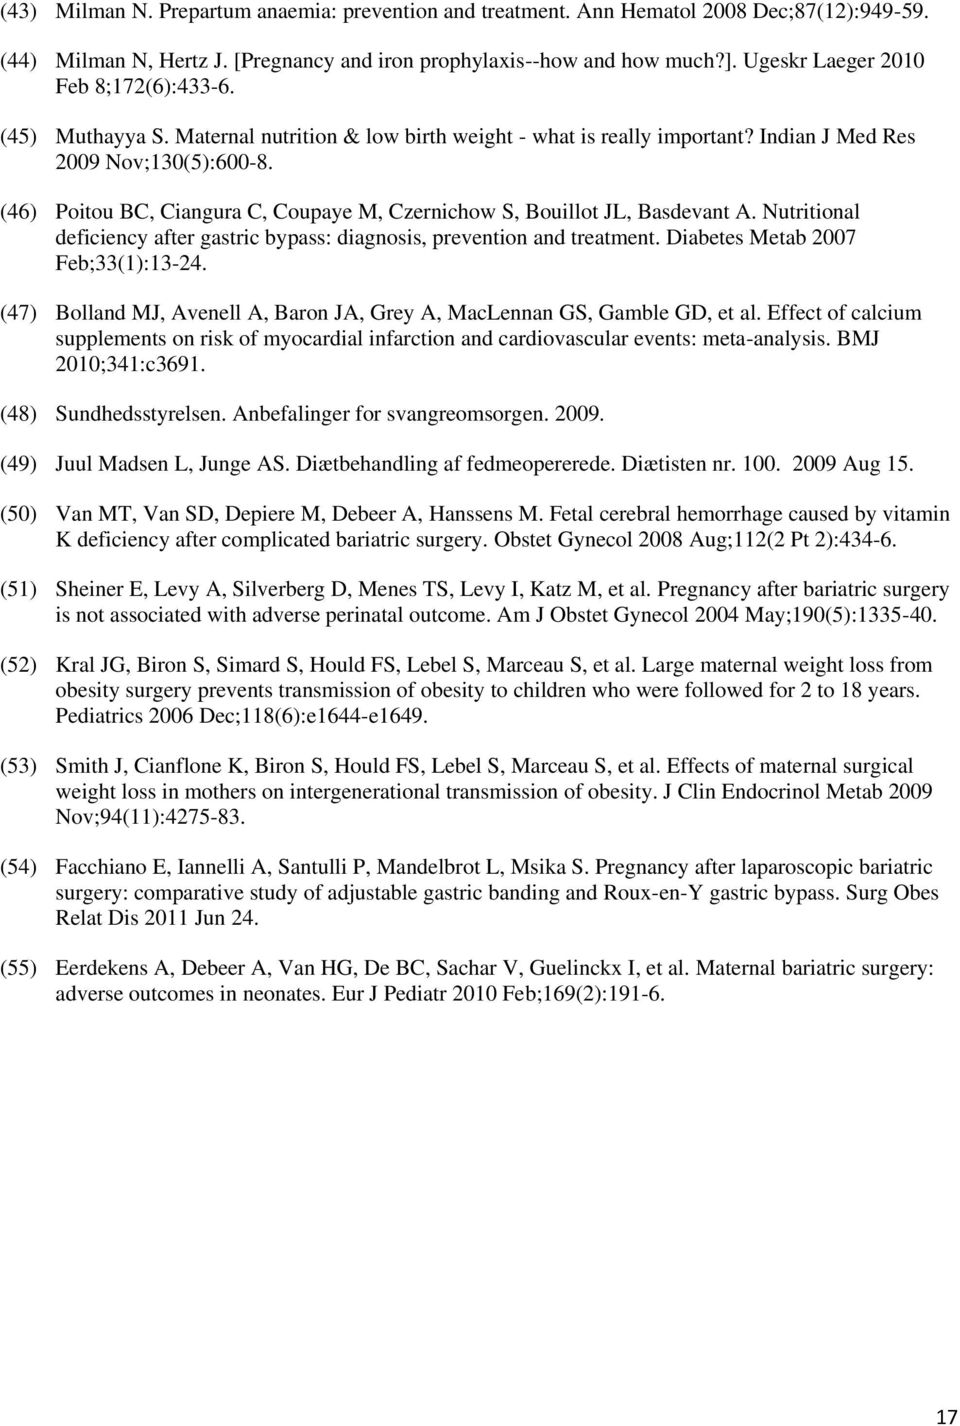 (46) Poitou BC, Ciangura C, Coupaye M, Czernichow S, Bouillot JL, Basdevant A. Nutritional deficiency after gastric bypass: diagnosis, prevention and treatment. Diabetes Metab 2007 Feb;33(1):13-24.